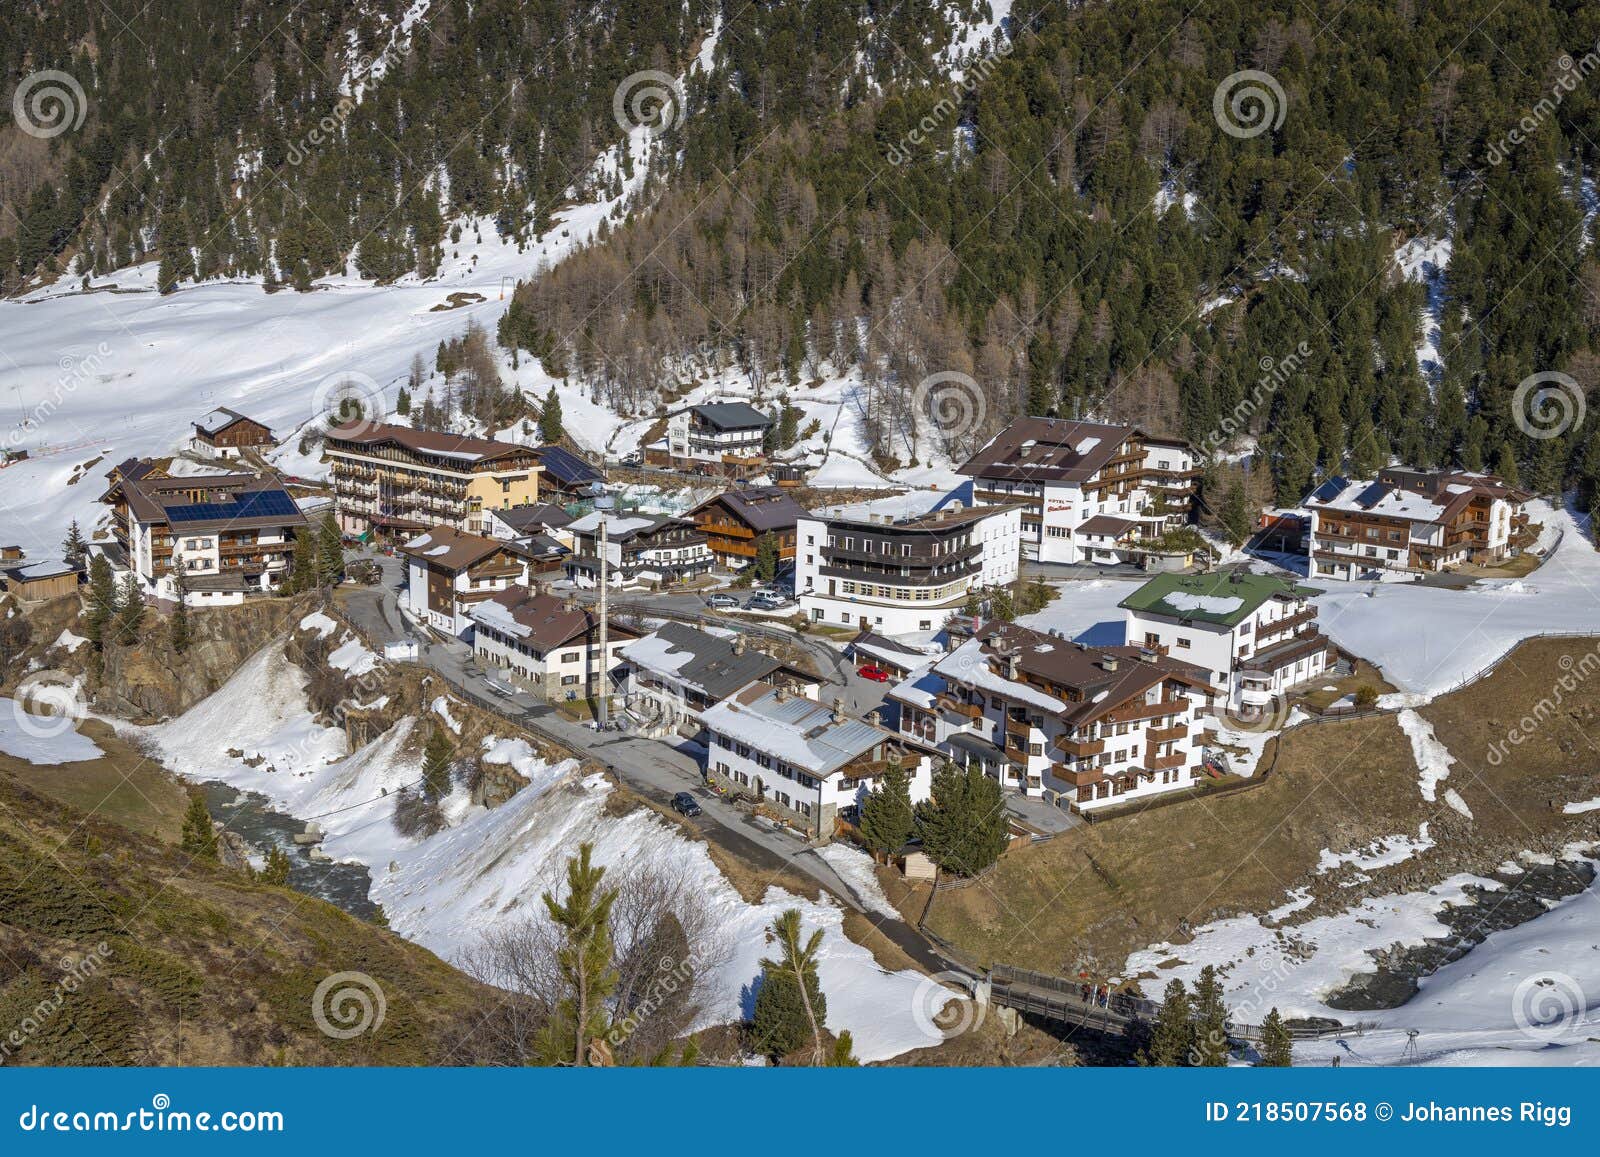 the village vent in the venter valley in tirol, austria